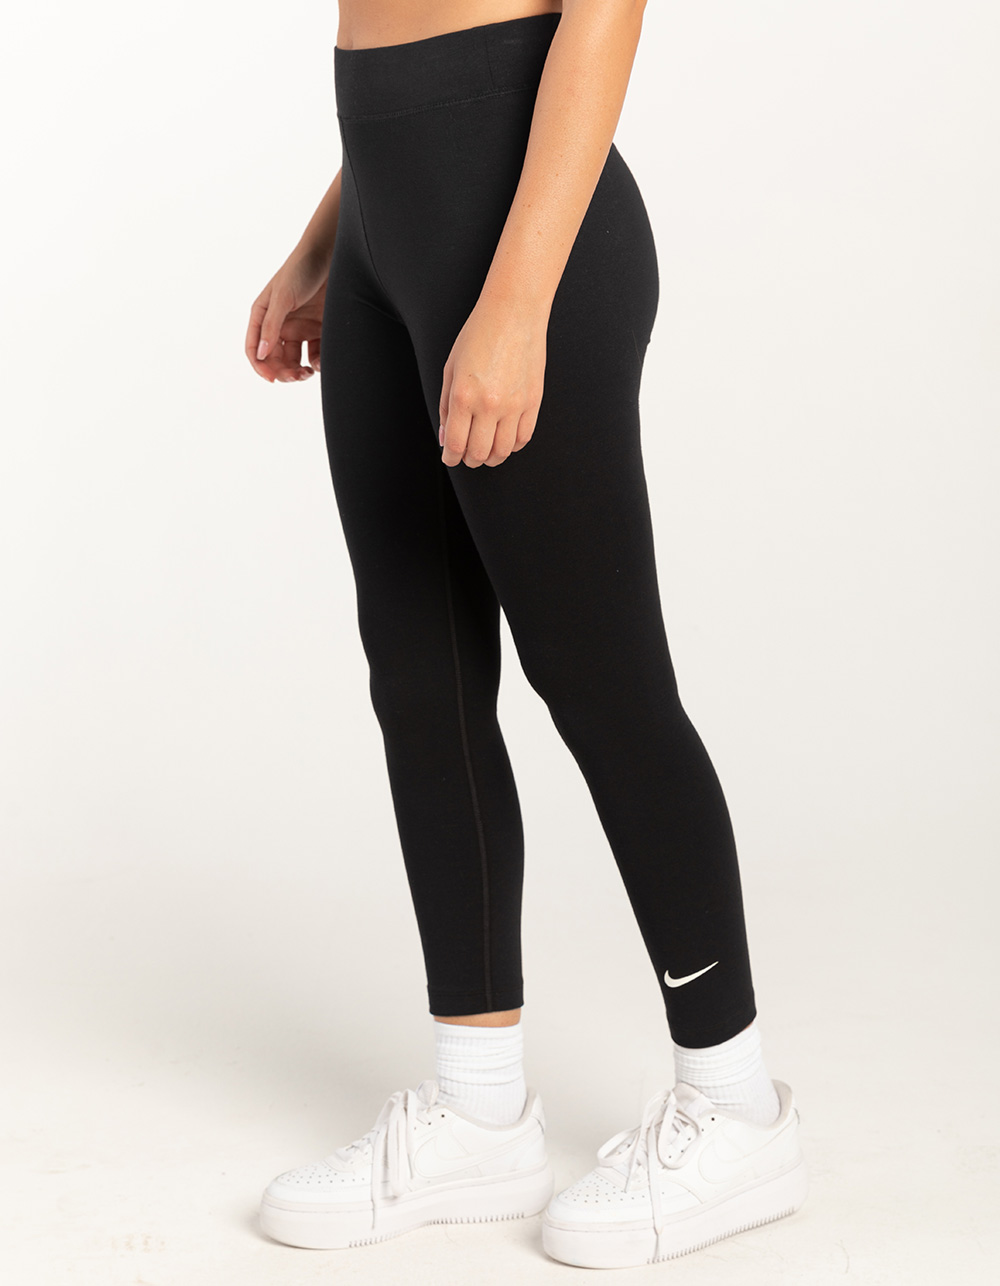 Nike Sportswear Women's Black Cotton Leggings - S – The Resell Club